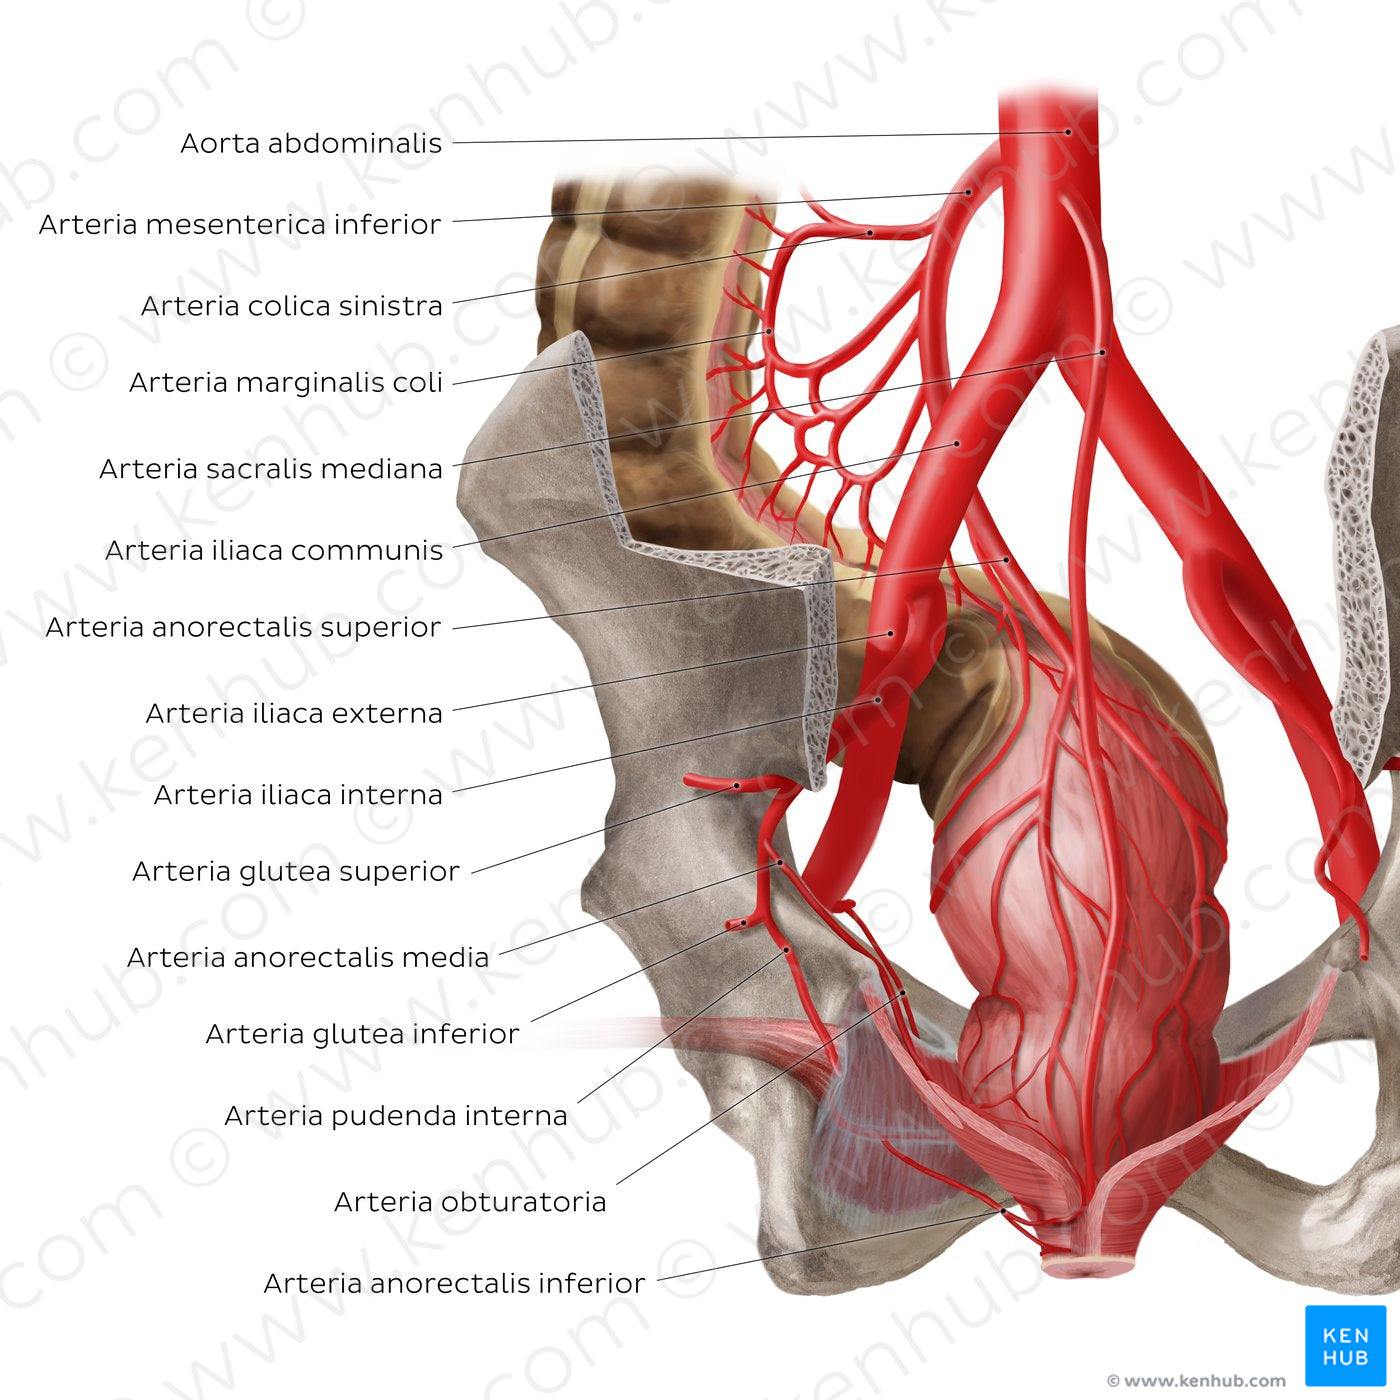 Arteries of the rectum (Latin)